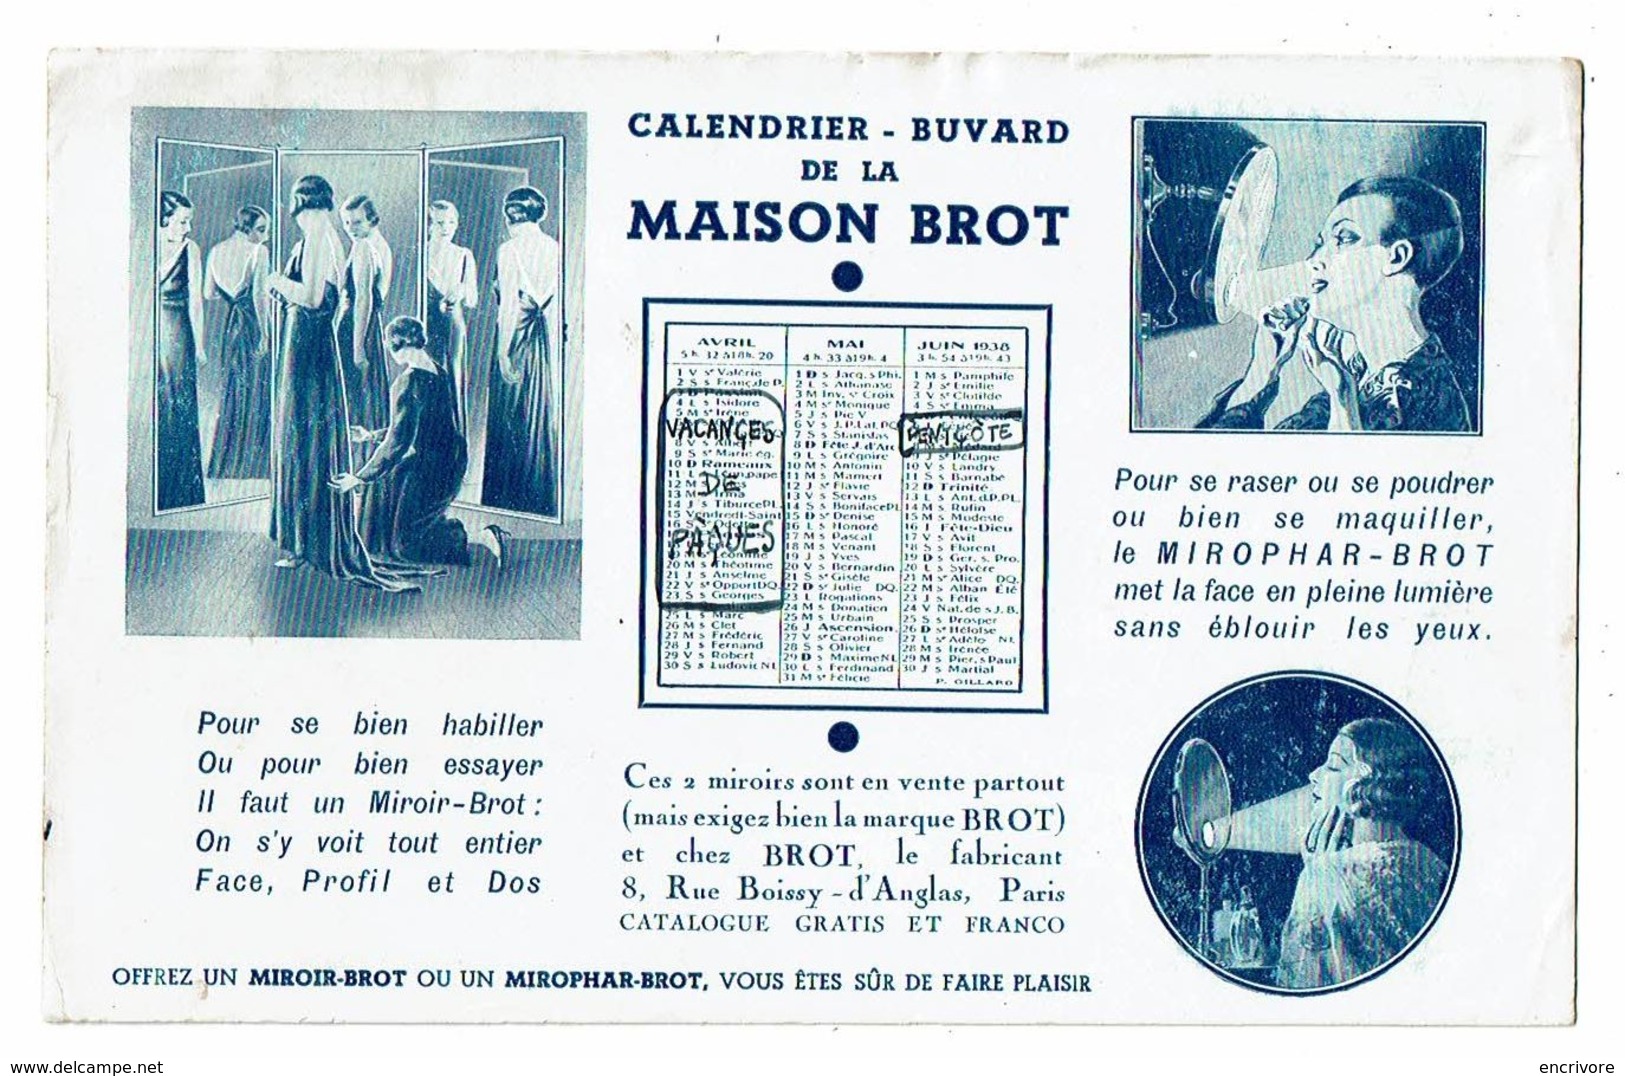 Buvard Calendrier 1938 MAISON BROT Mode Miroir Mirophar Brot - Perfume & Beauty